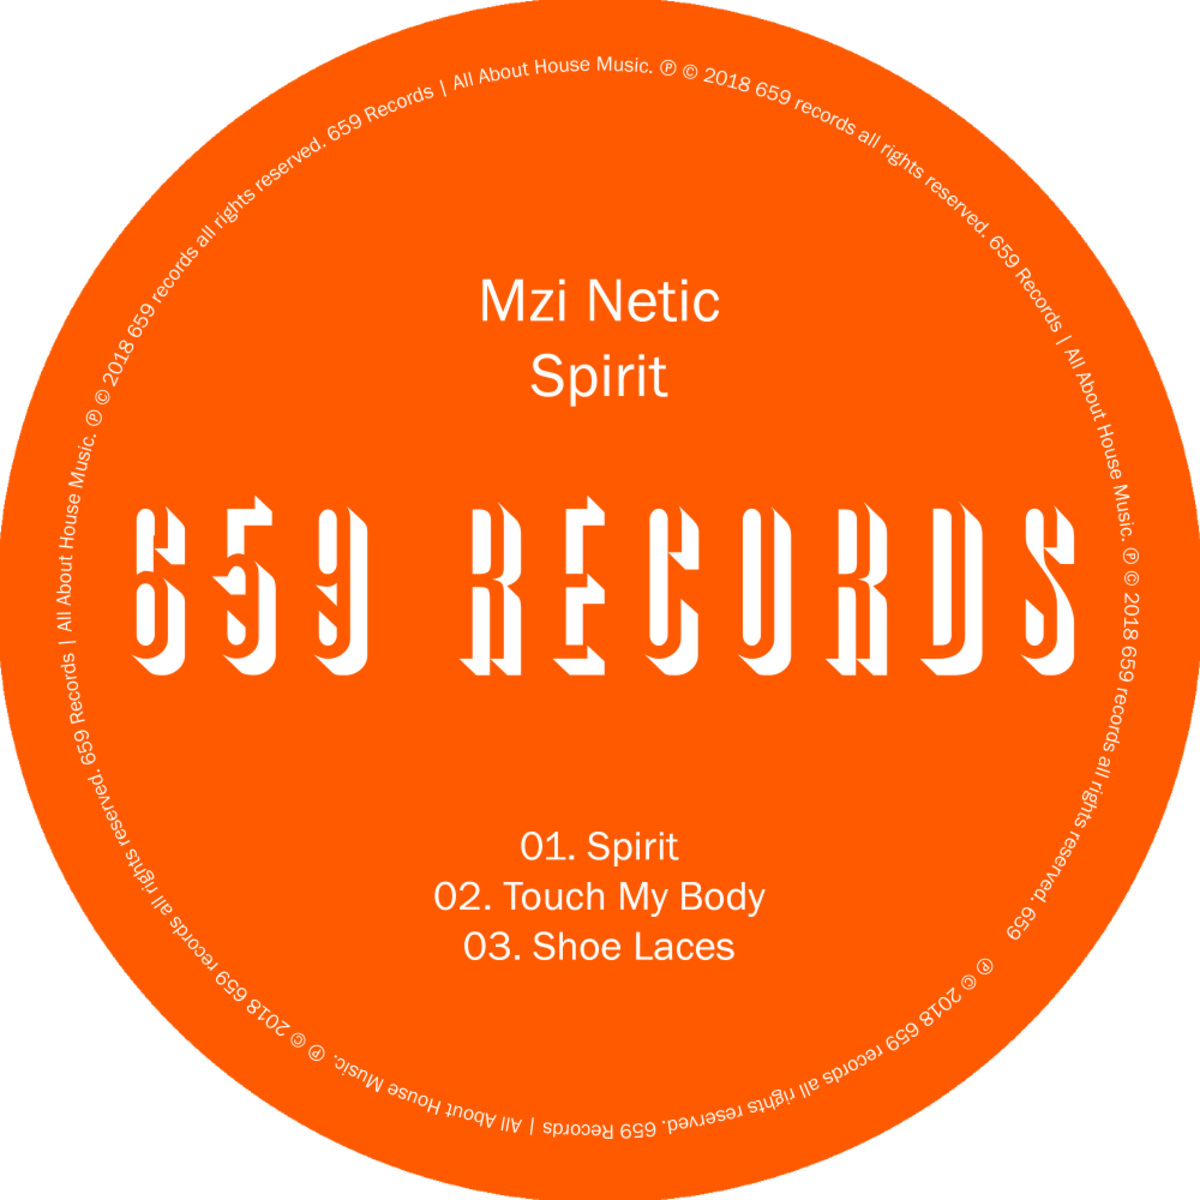 Mzi Netic - Spirit / 659 Records